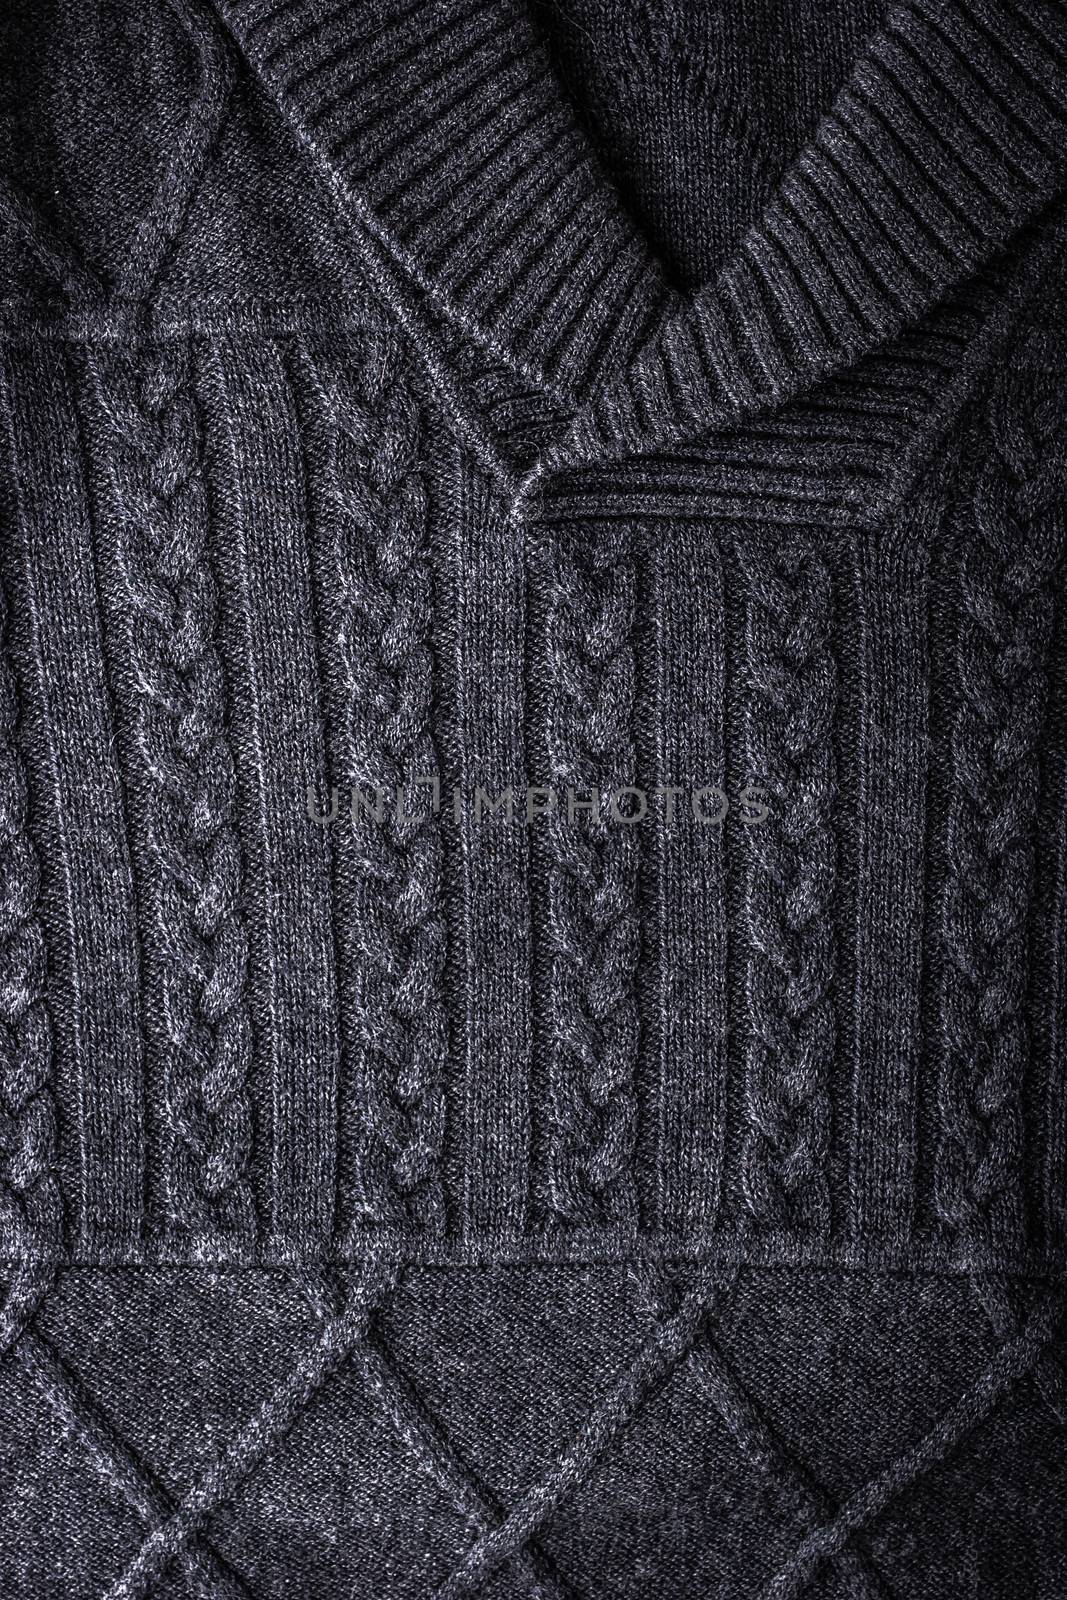 Grey figured sweater background vertical